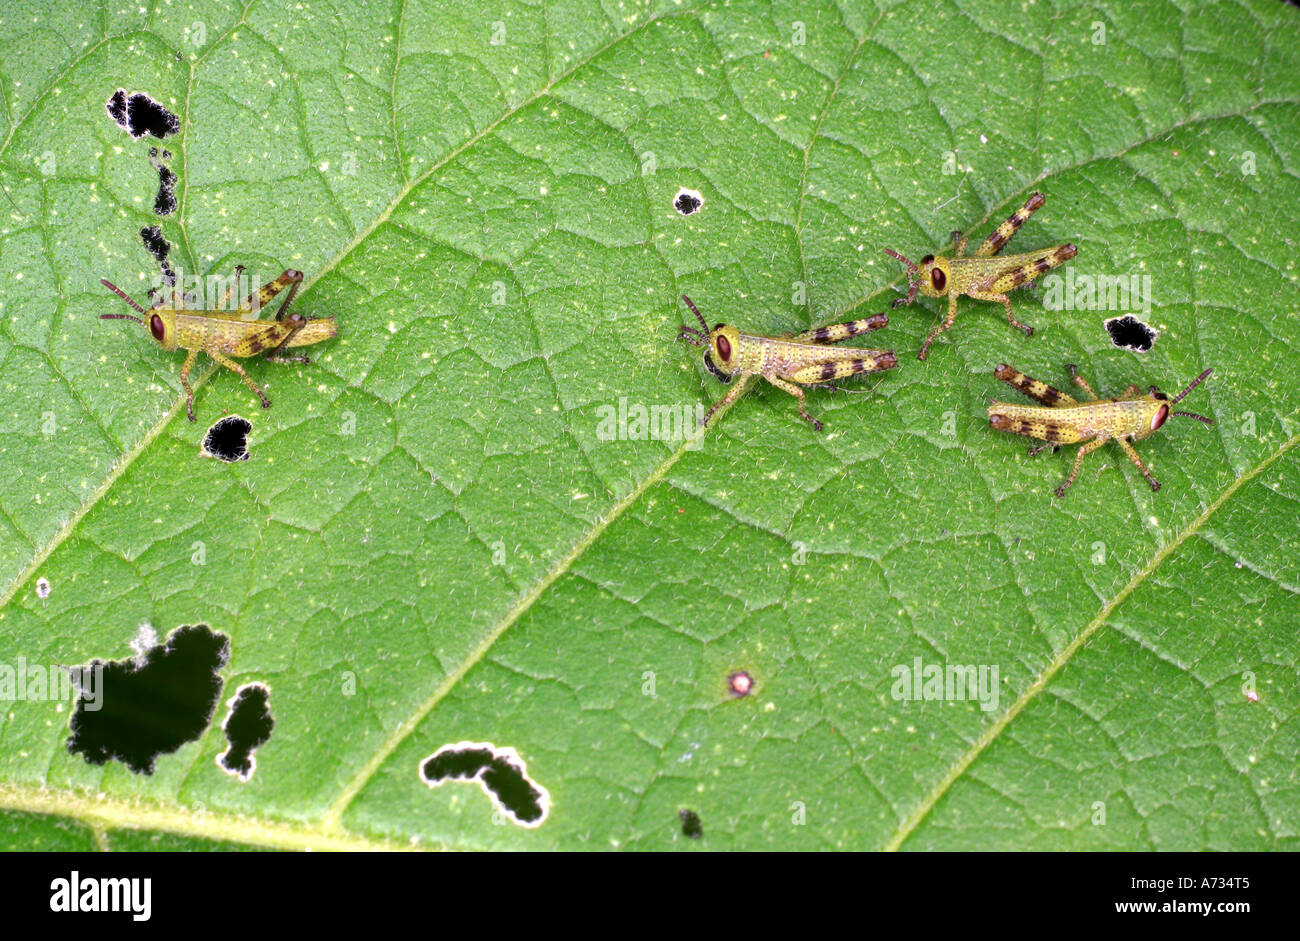 Giant Grasshoppers four nymphs or instars, Valanga irregularis Stock Photo